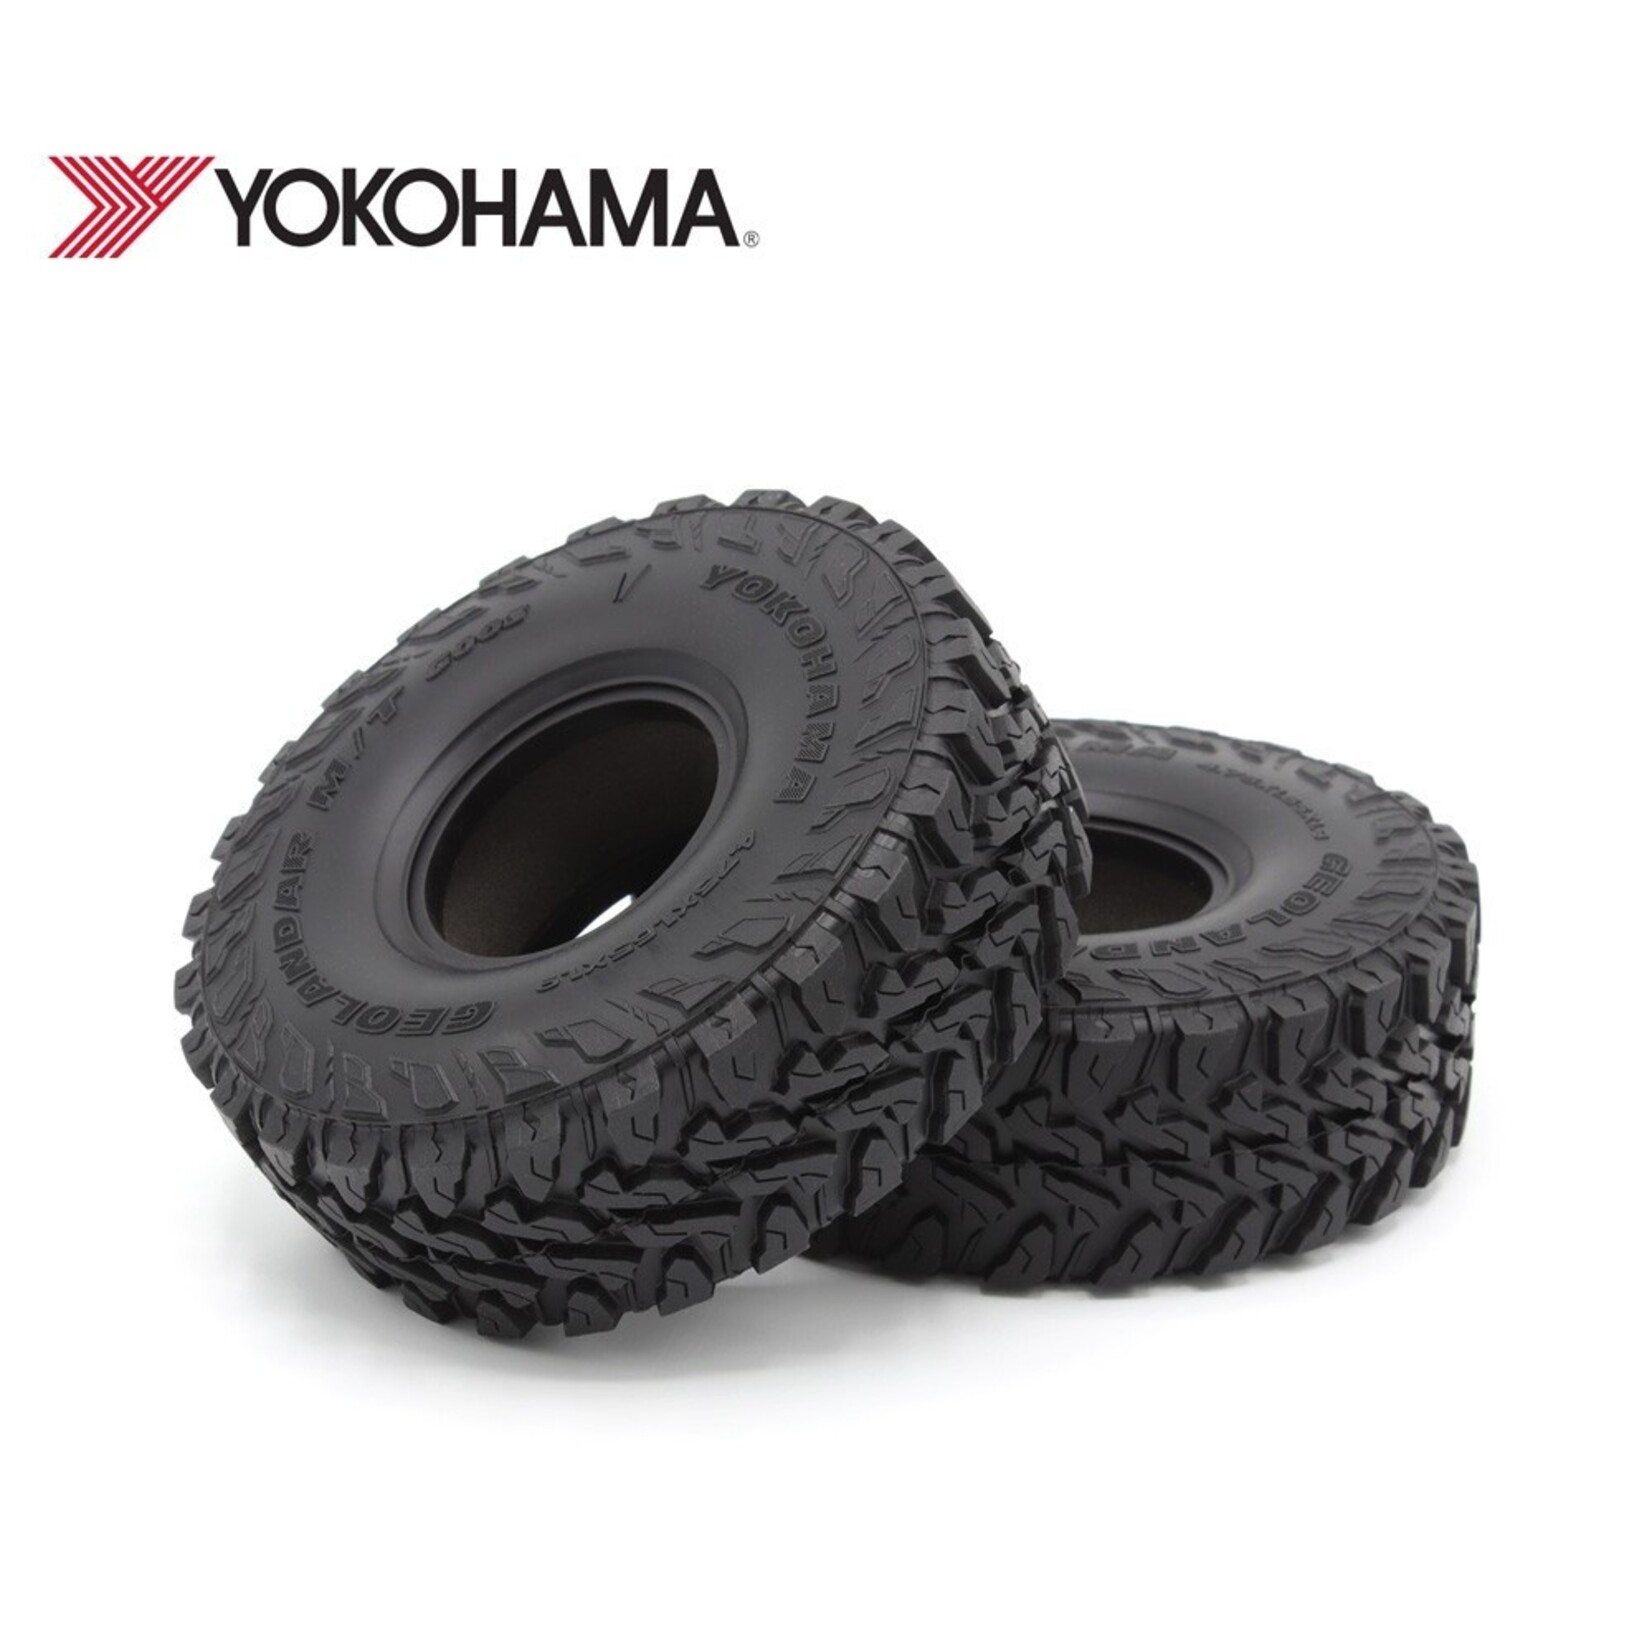 Vanquish Products Vanquish Products Yokohama Geolander M/T 1.9" Rock Crawler Tires (2) (Red) #VPS10105